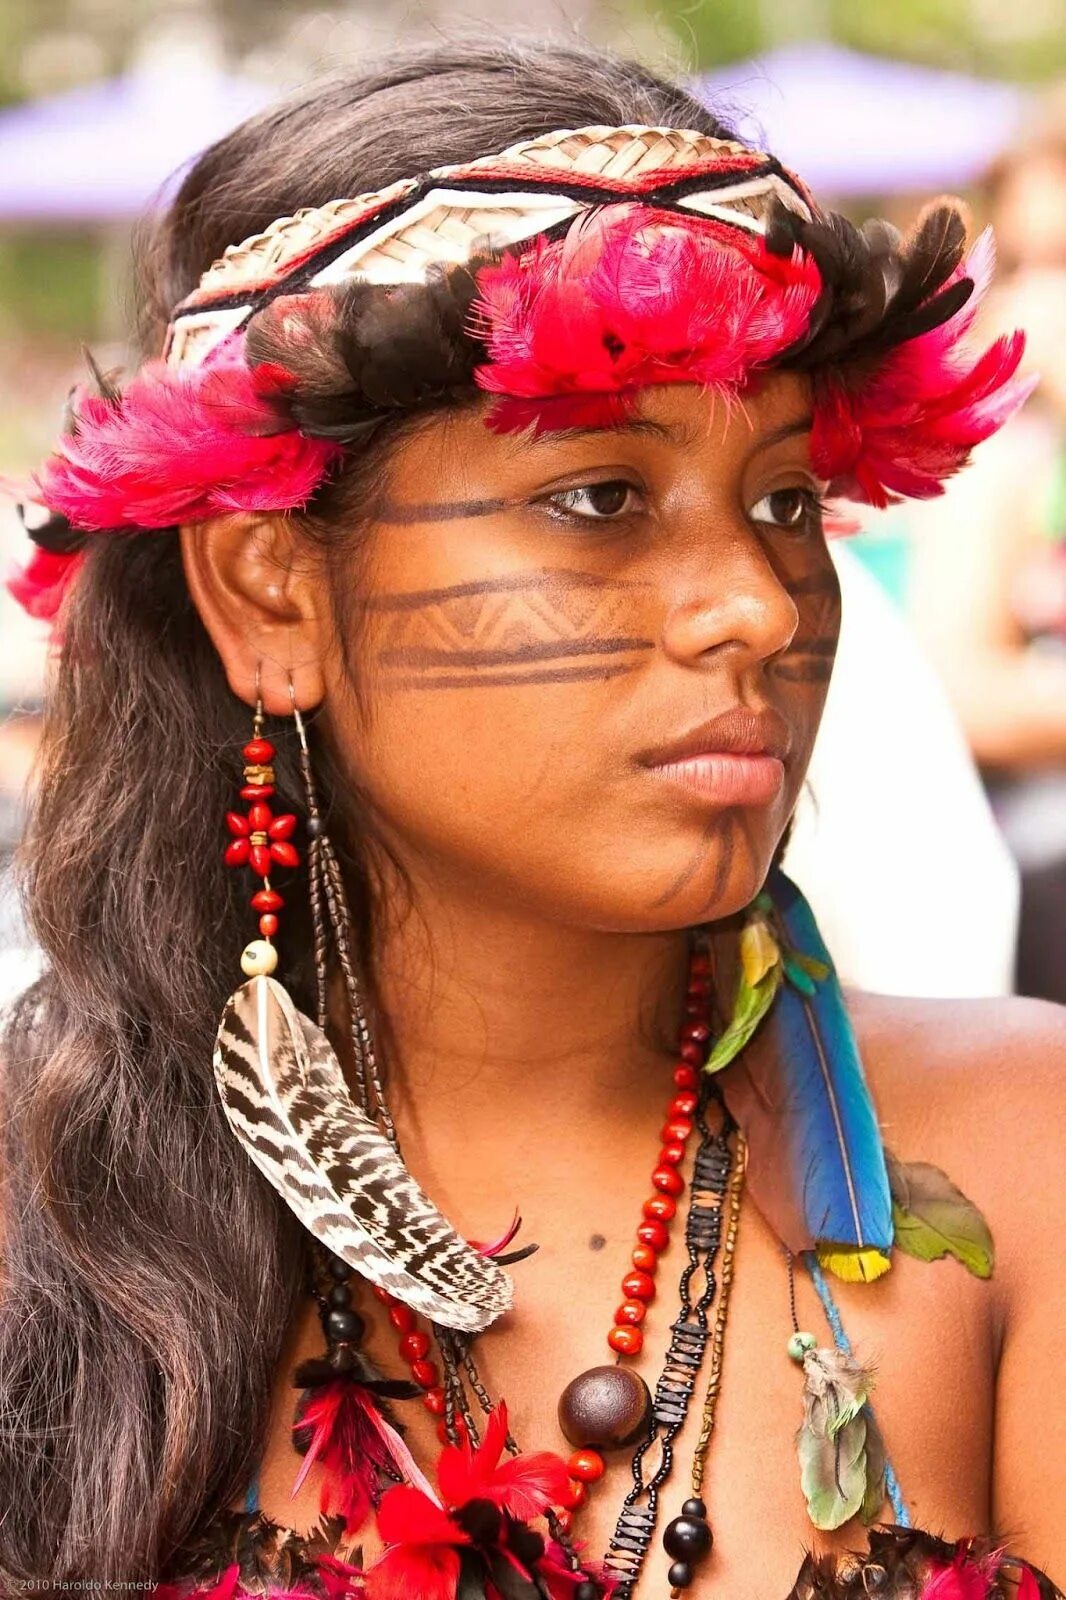 Tribe girl. Индеец трайбл. Бразилия Амазонские индейцы женщины. Амазонка индейцы яномамо. Араваки индейцы.